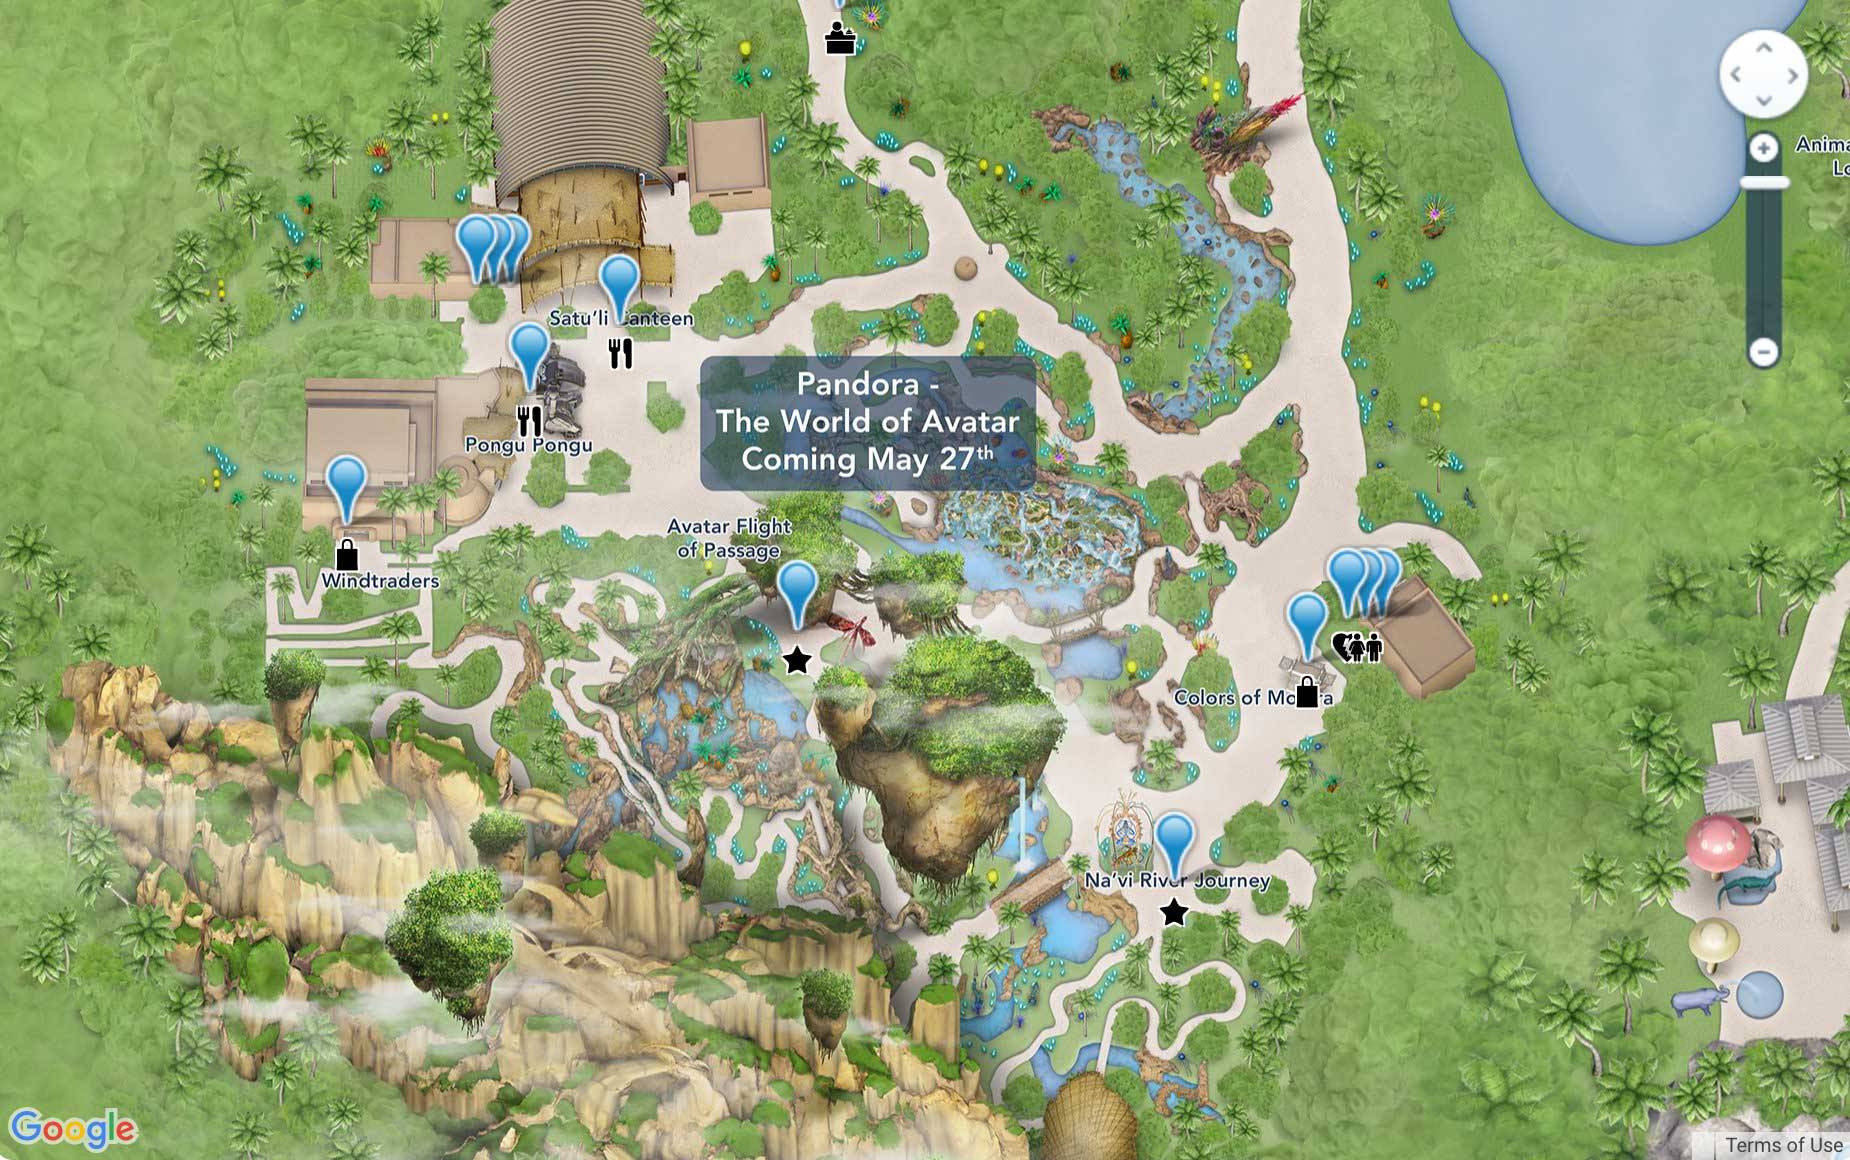 PHOTO - Disney's online Walt Disney World maps updated to include Pandora - The World of Avatar